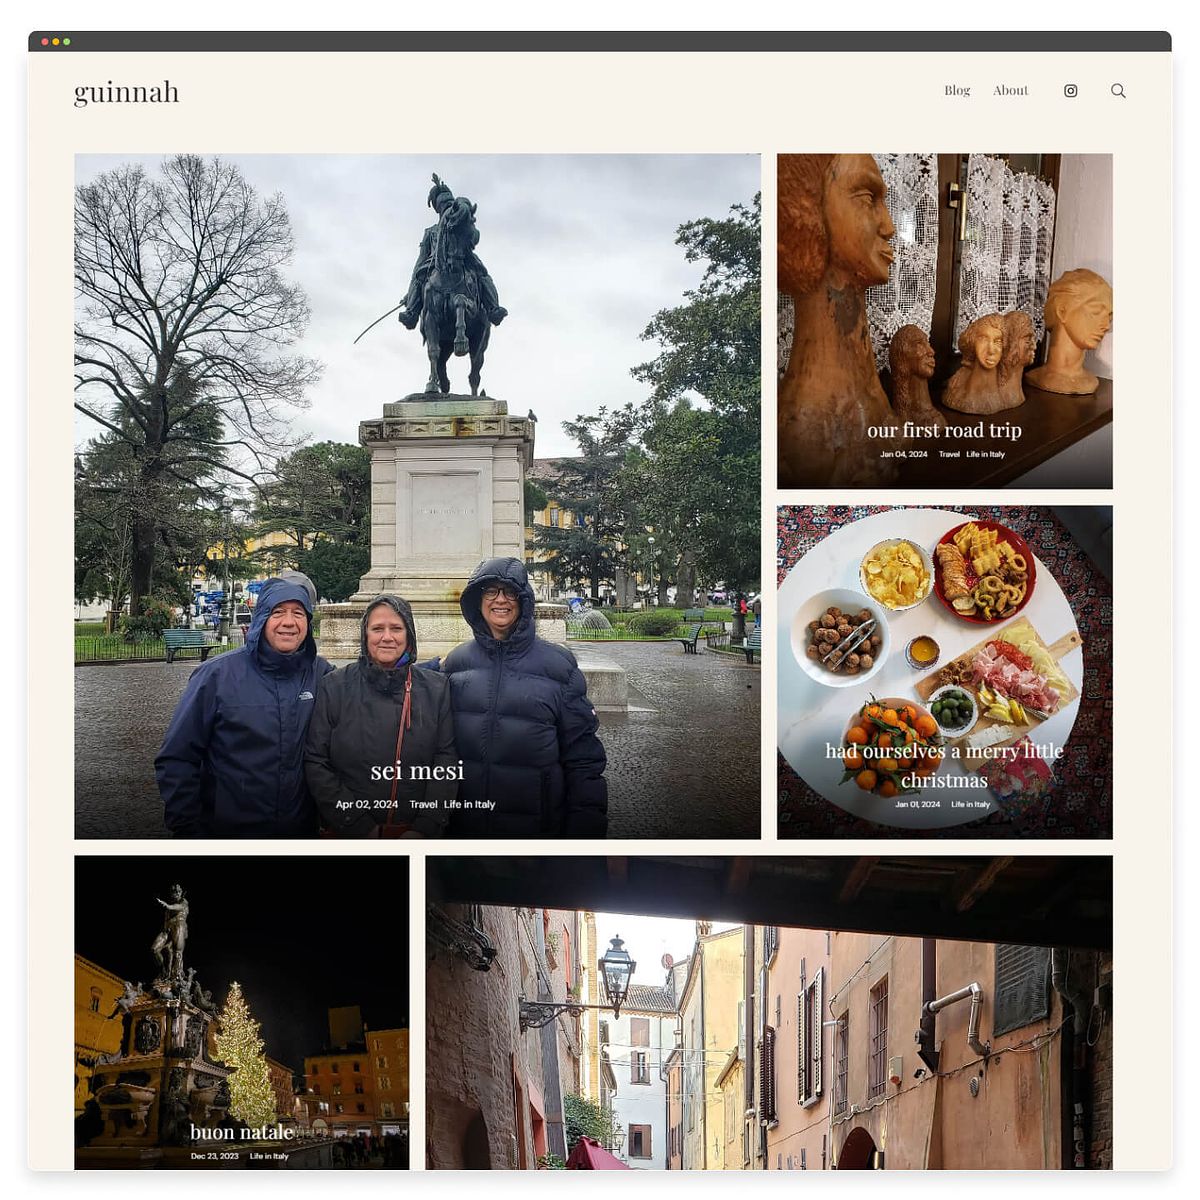 Guinnah's travel blog page